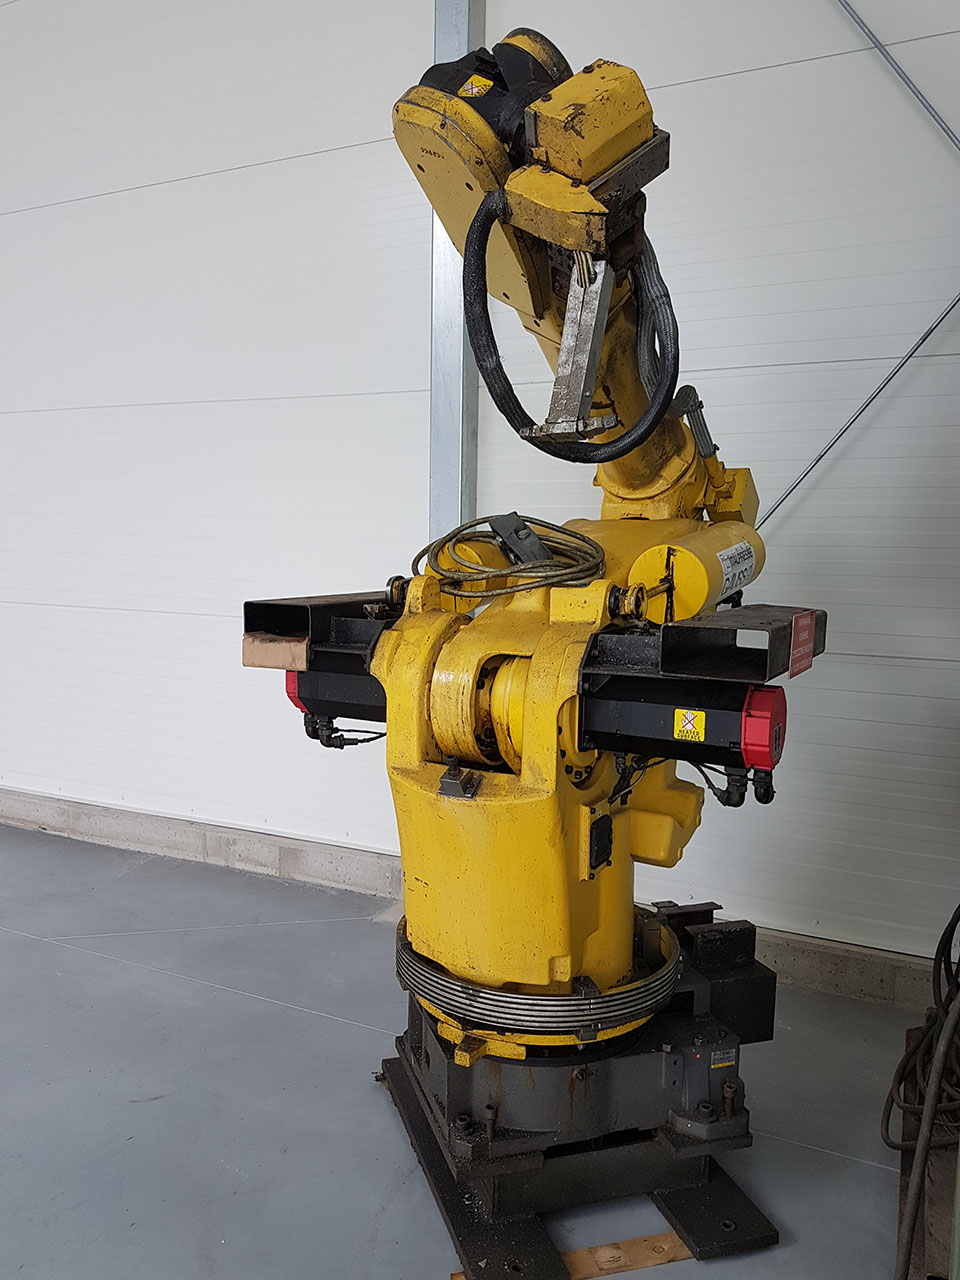 FANUC S-420 i F Foundry Roboter, gebraucht HR1815